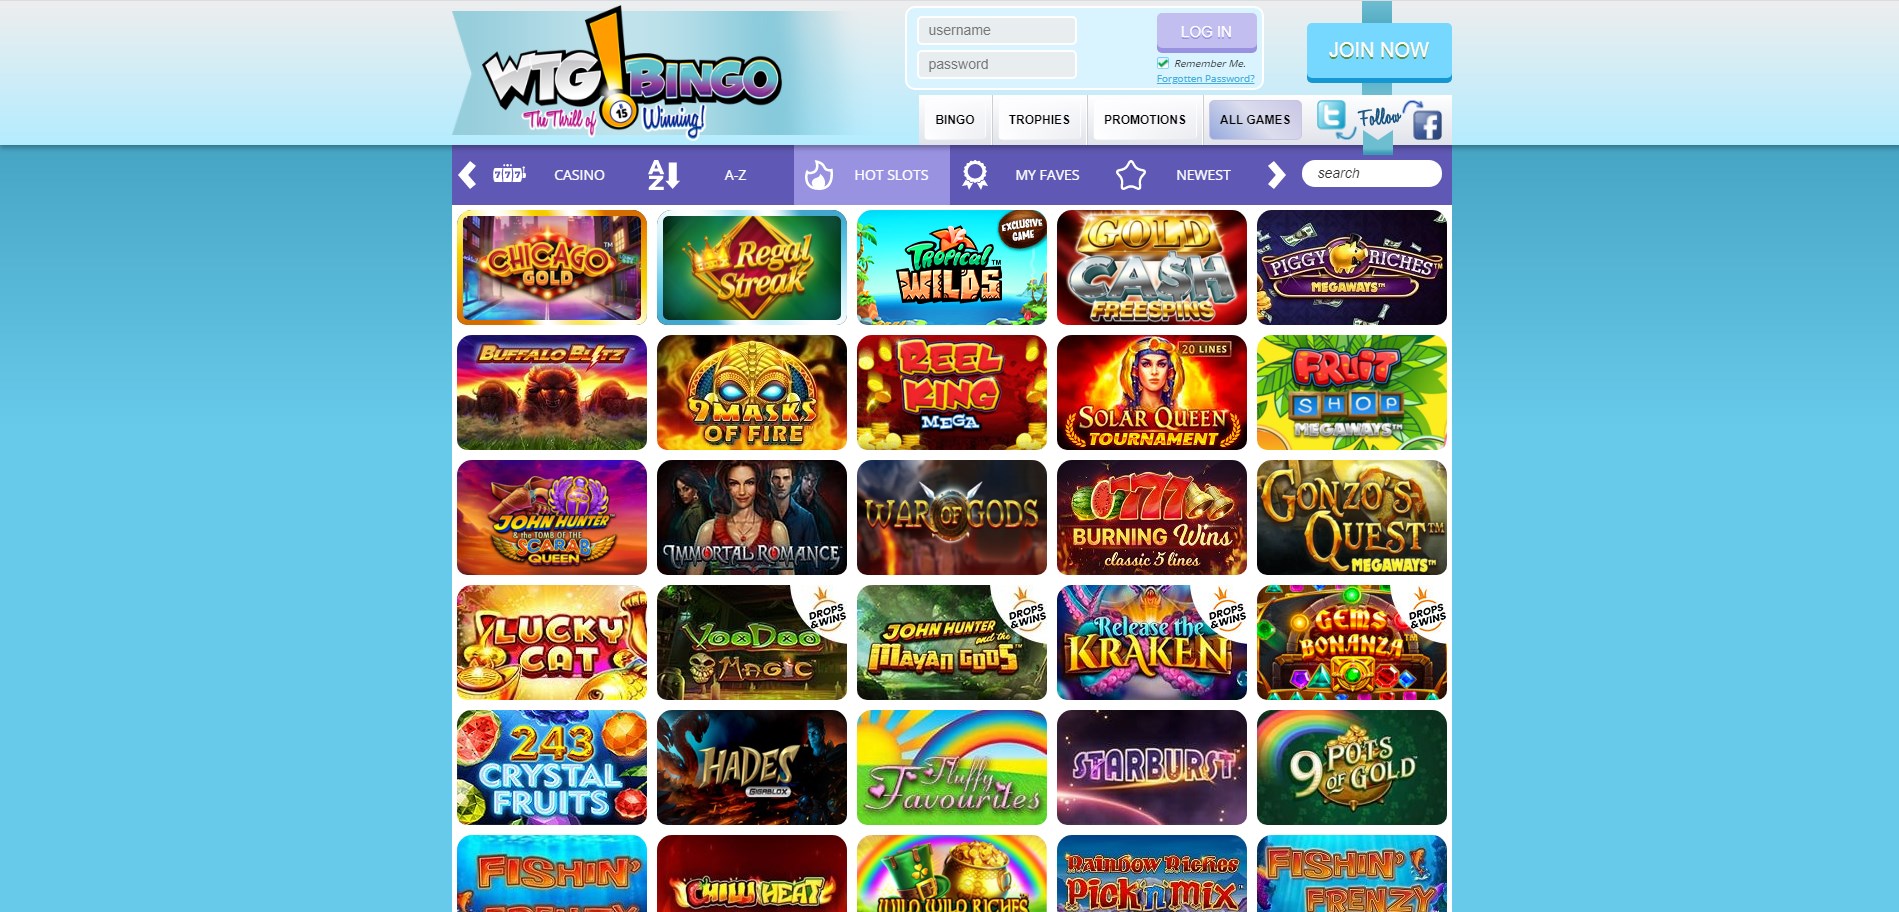 WTG Bingo Casino Games